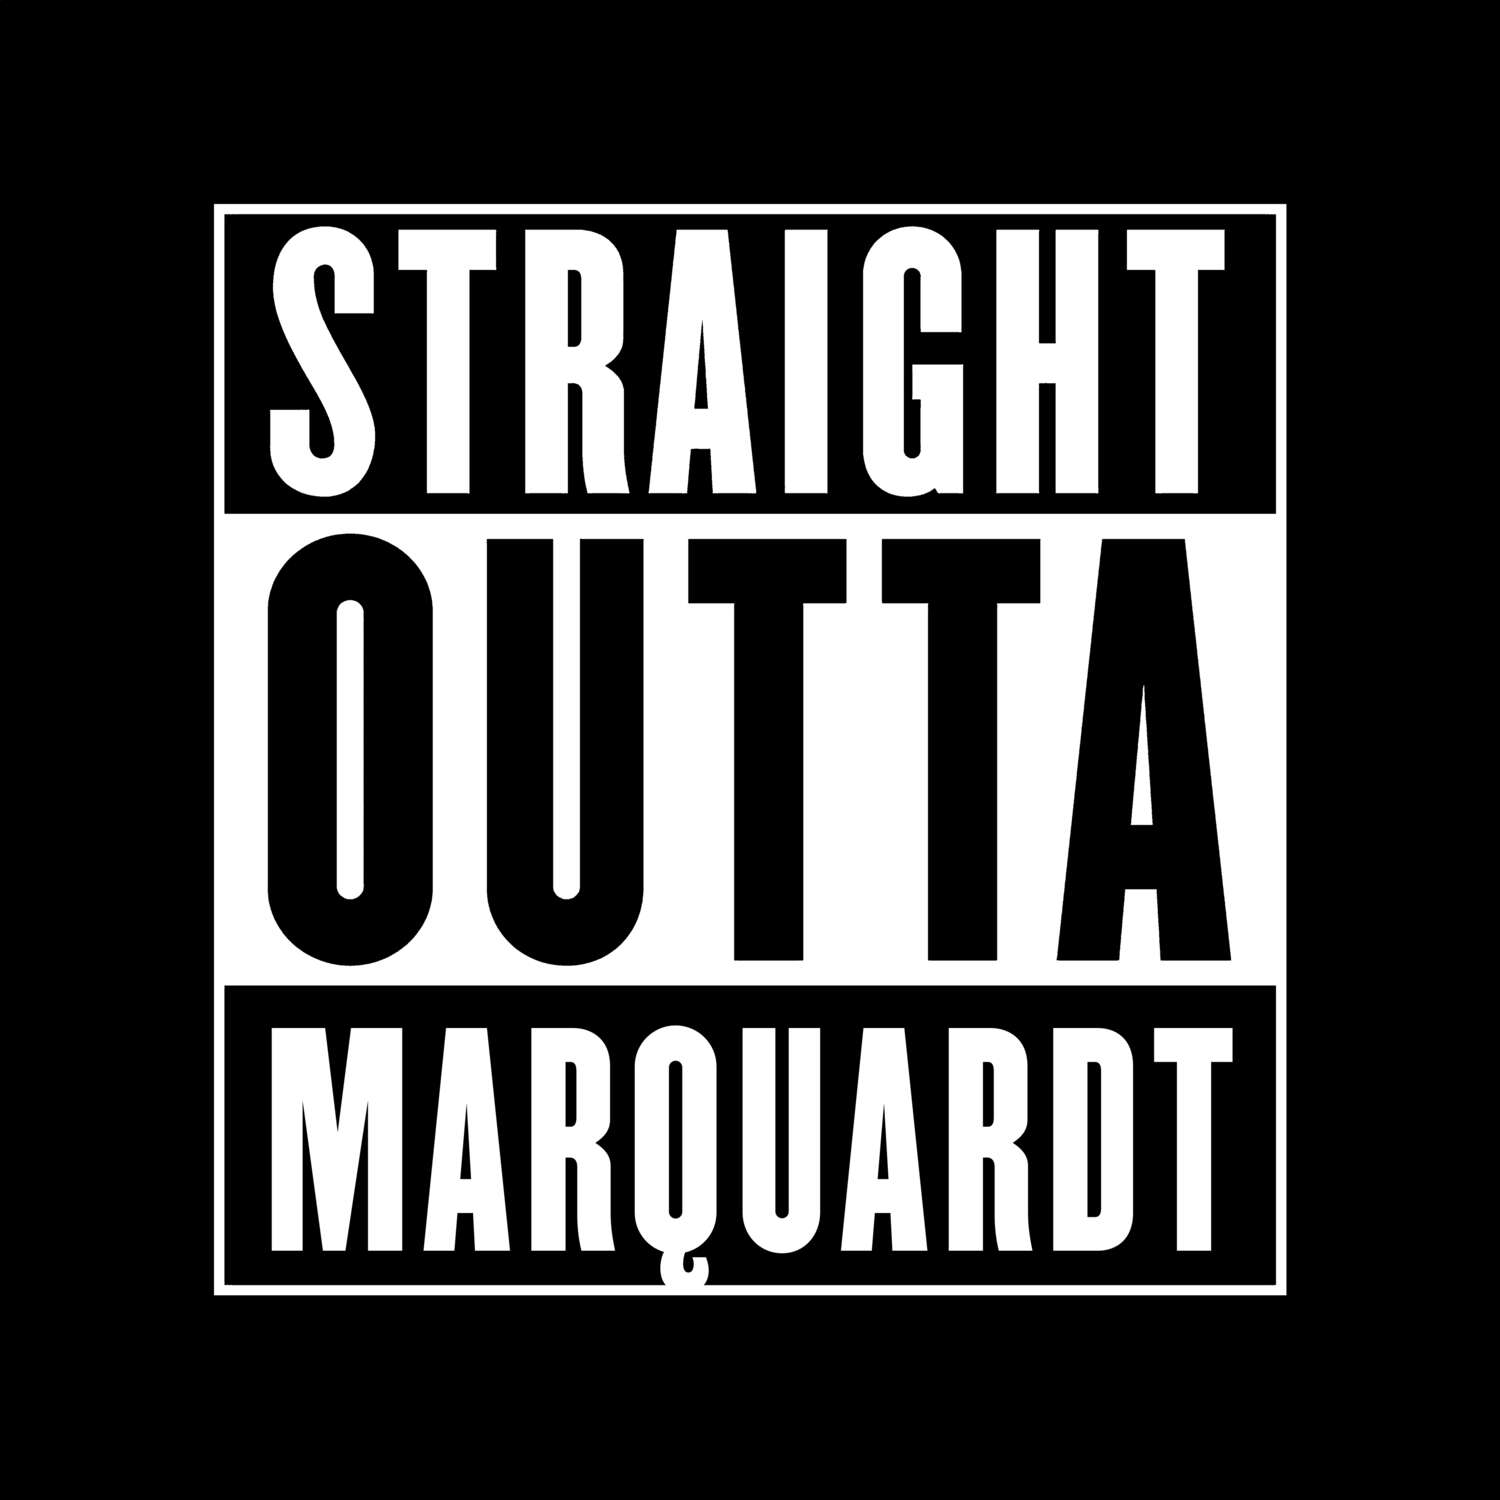 Marquardt T-Shirt »Straight Outta«